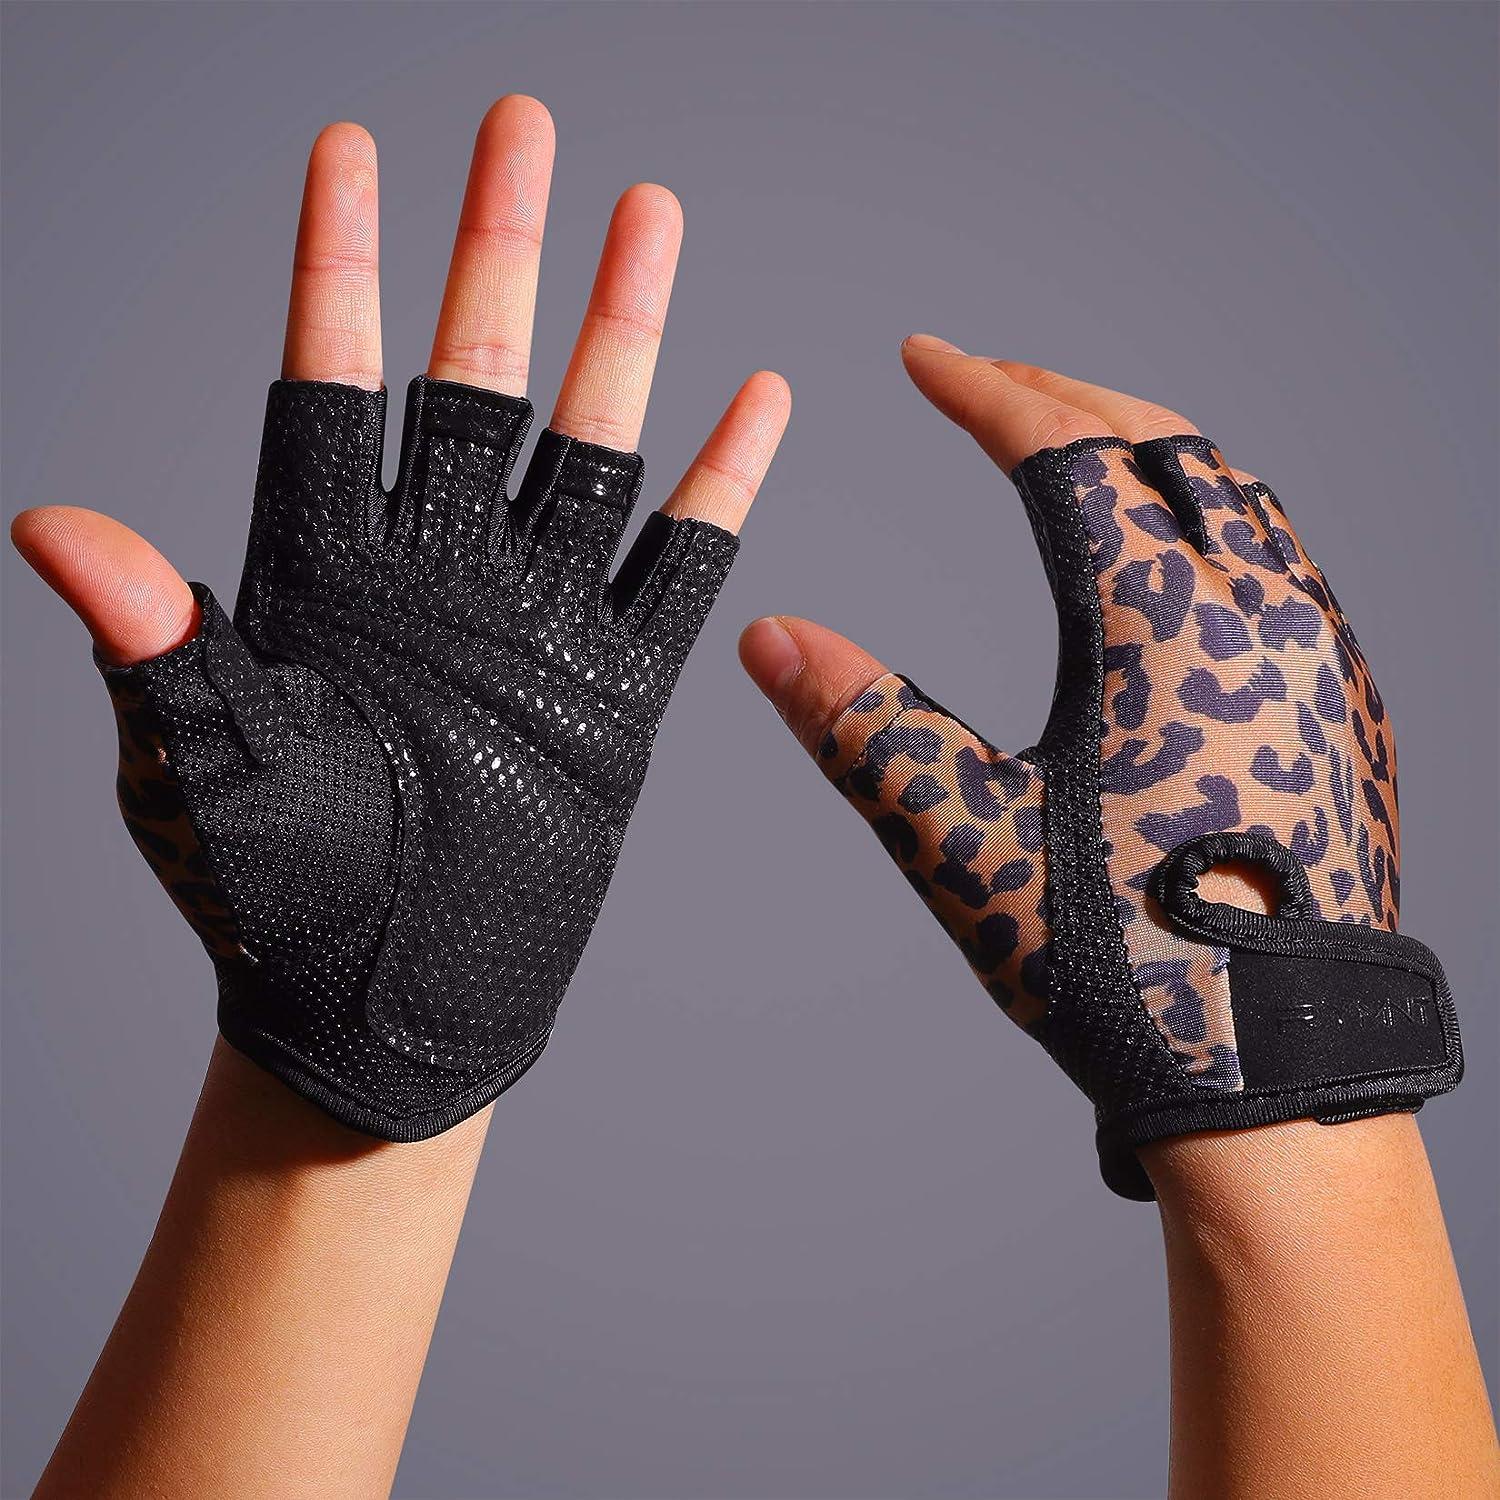 Unisex Gym Mens Fingerless Gloves For Fitness, Weightlifting, Body